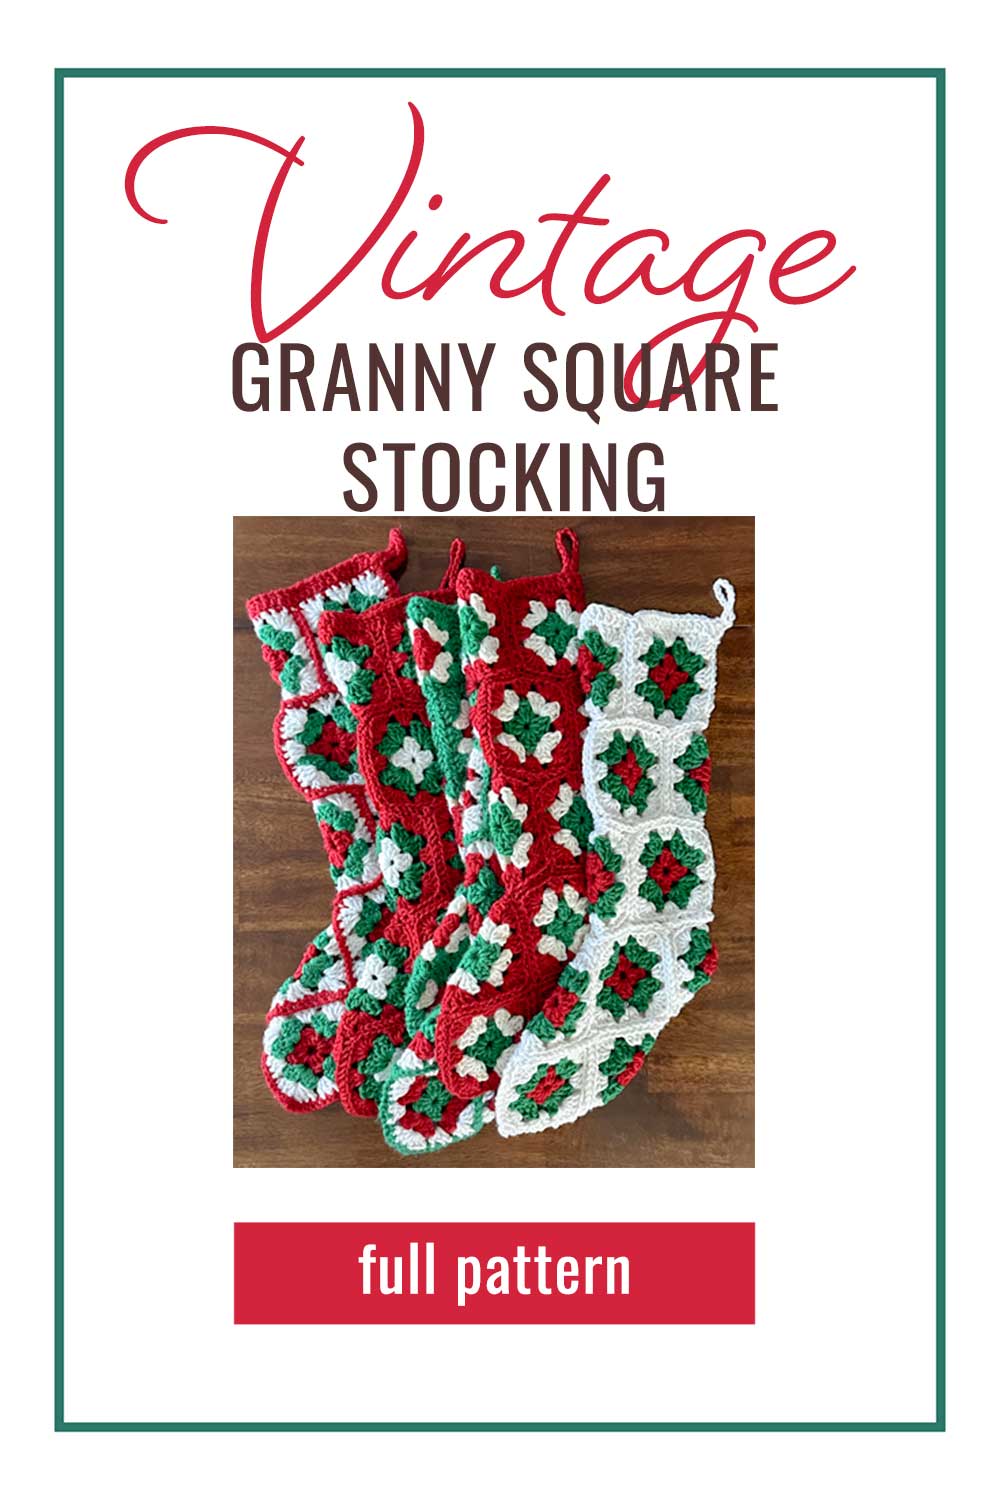 https://thenewlighterlife.com/wp-content/uploads/2020/12/vintage-granny-square-stocking-pinterest.jpg